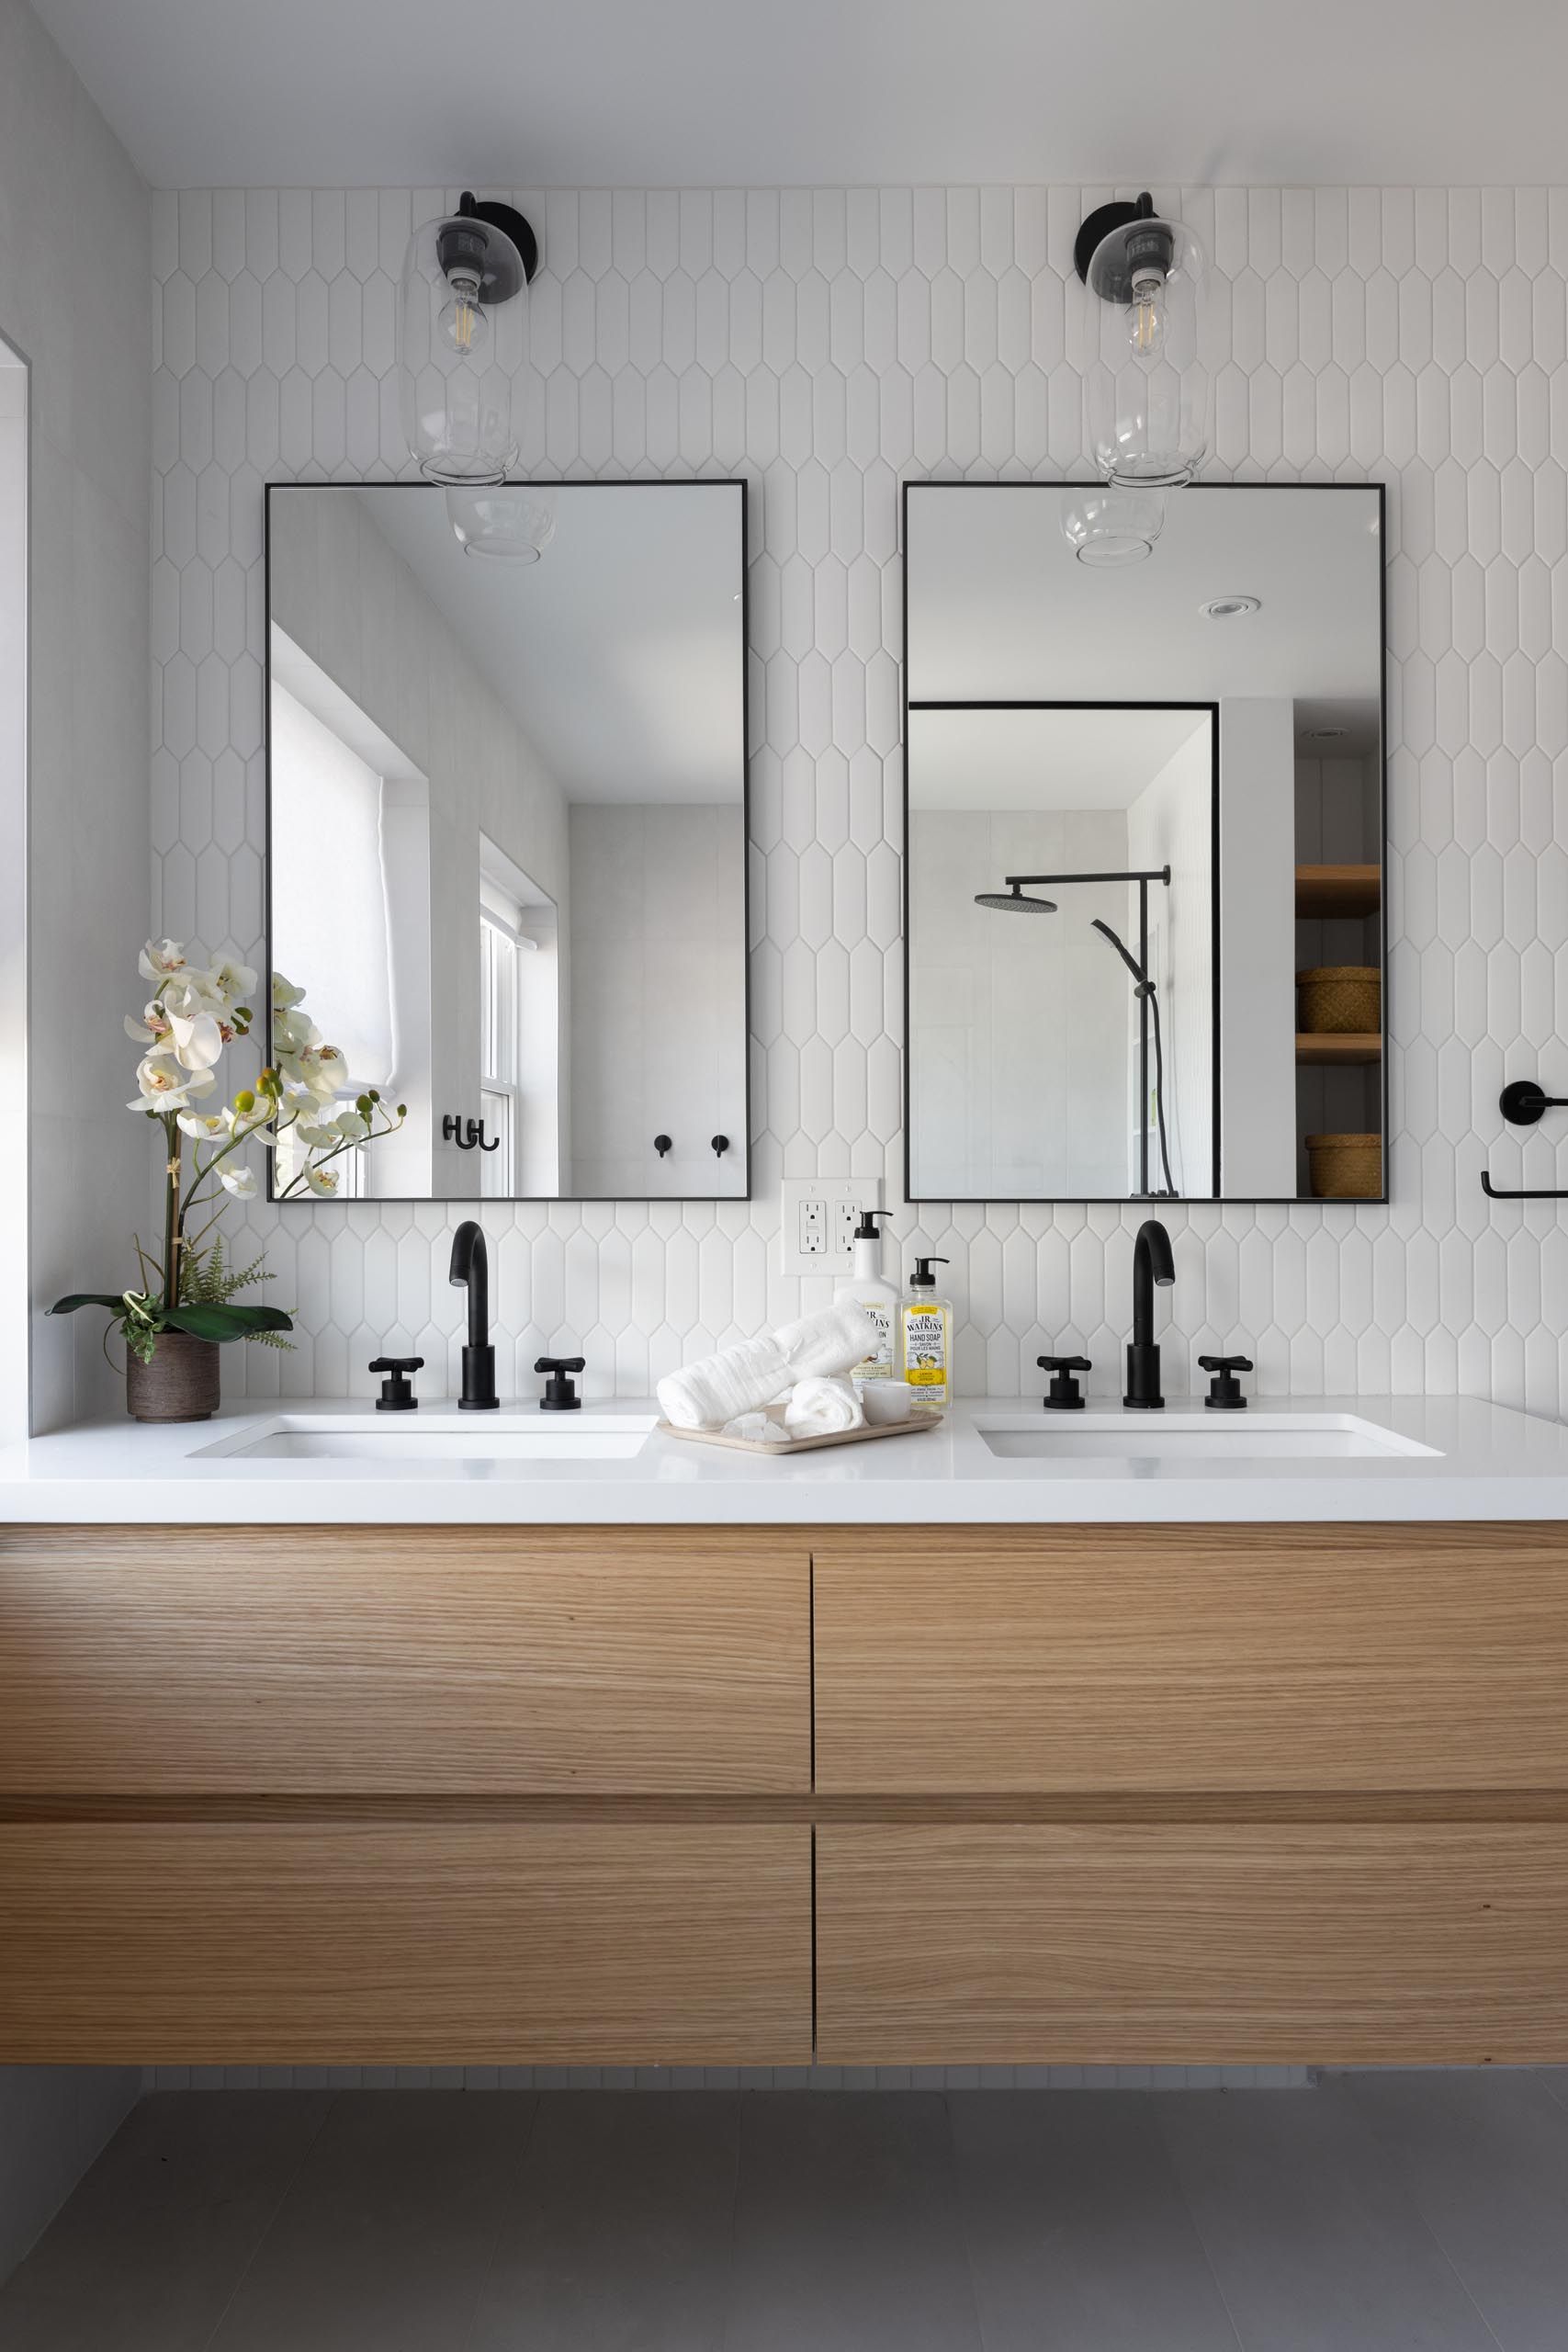 Designs for double sink vanity